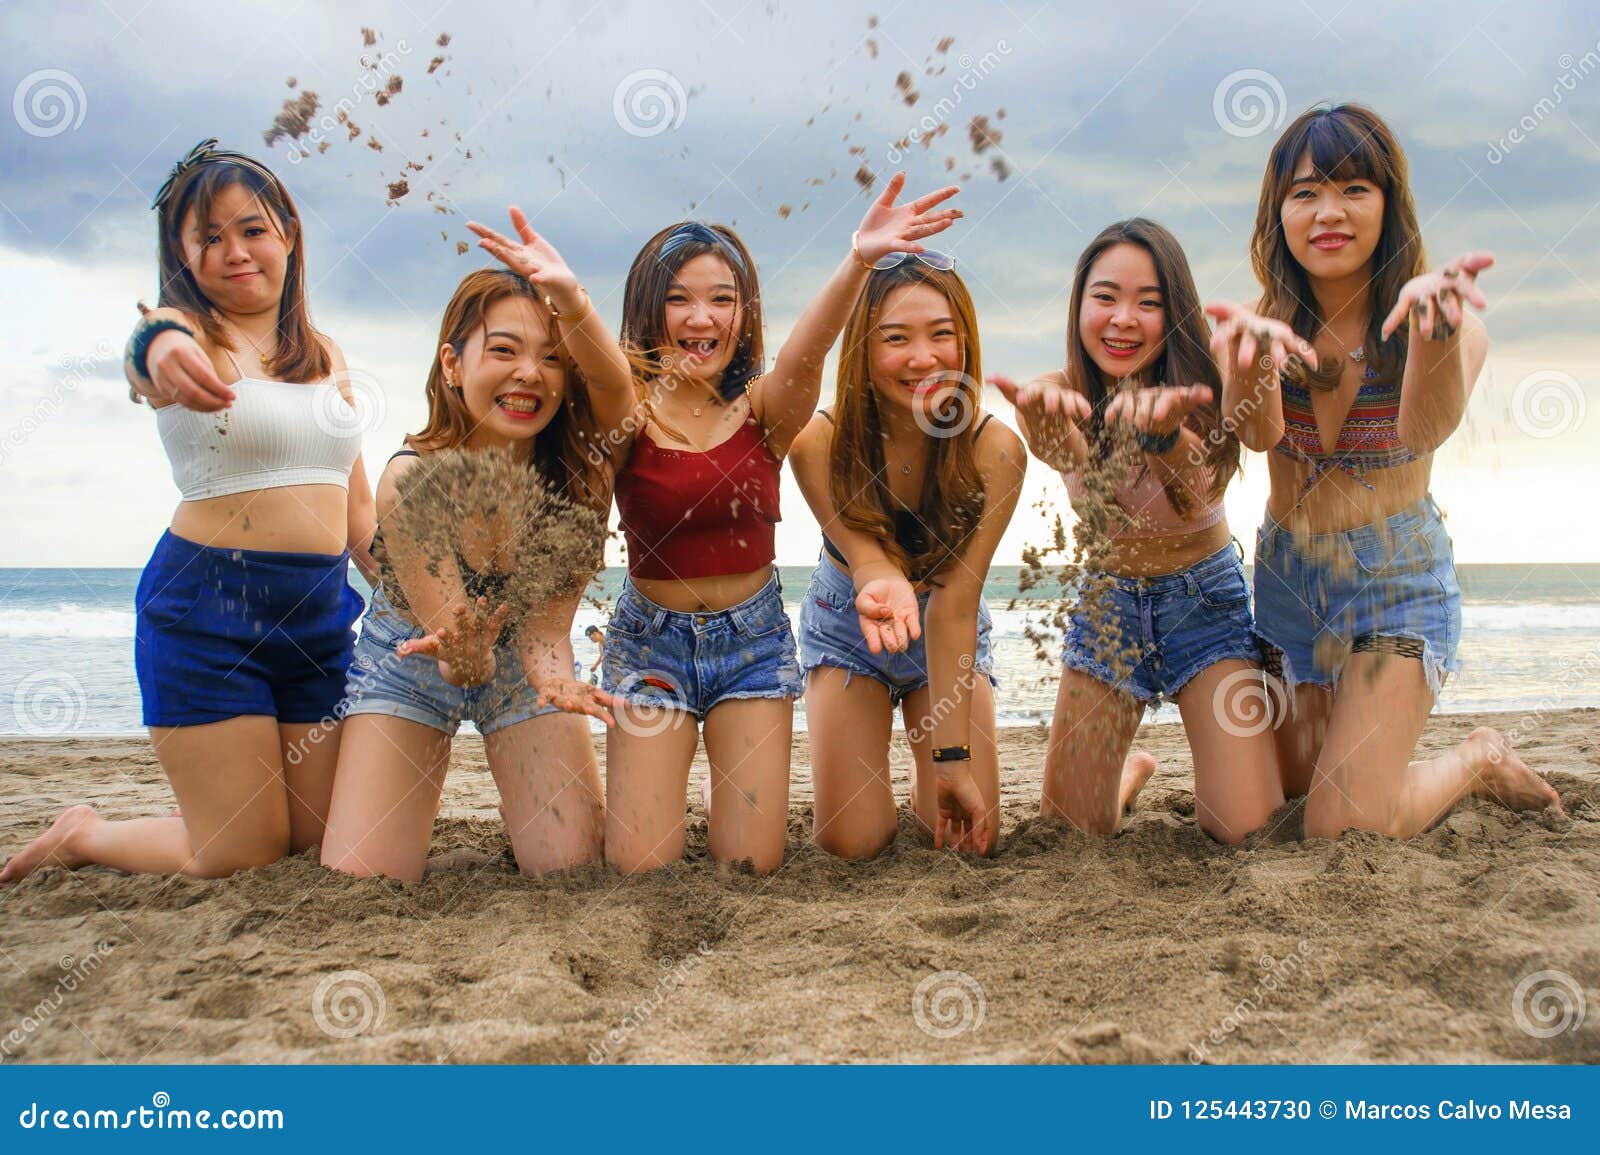 Nude Girls Of Corea Alta California